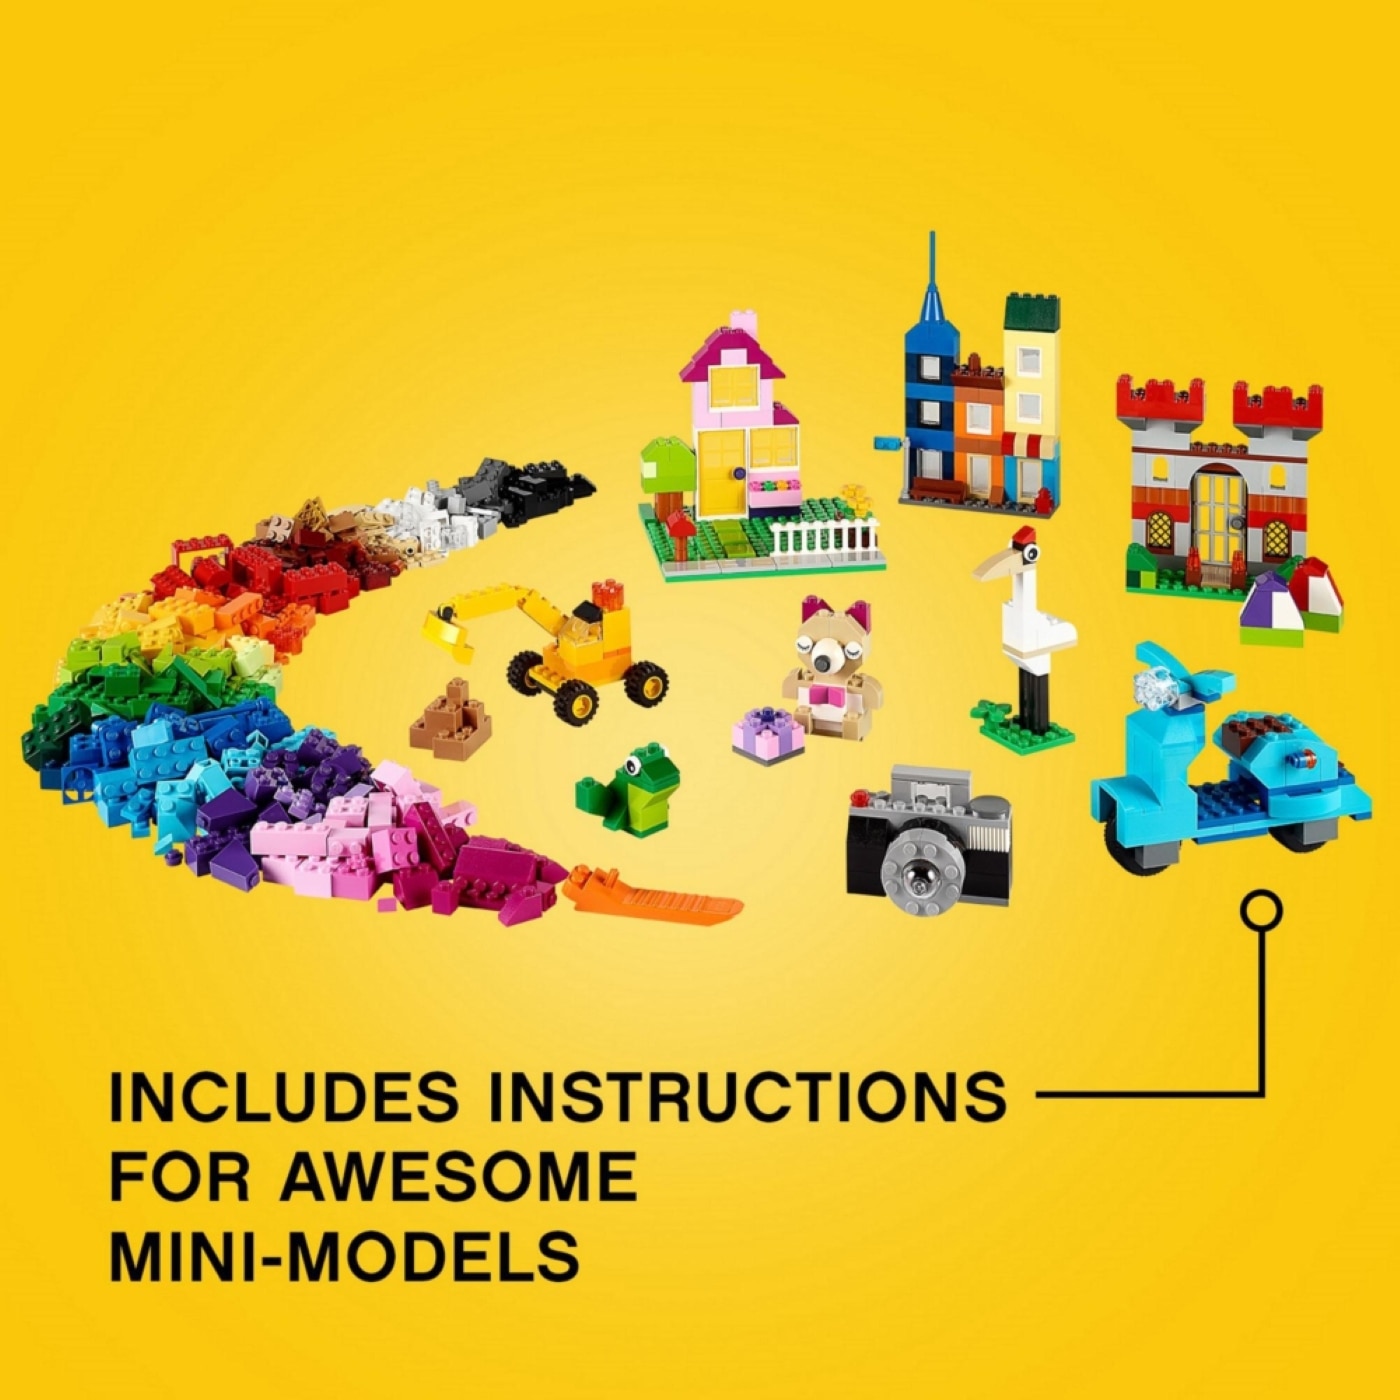 LEGO 經典系列 大型創意拼砌桶，培養 3D 空間概念，激發想像力、發揮創意，積木堆疊、組合，強化手、眼、腦協調能力。